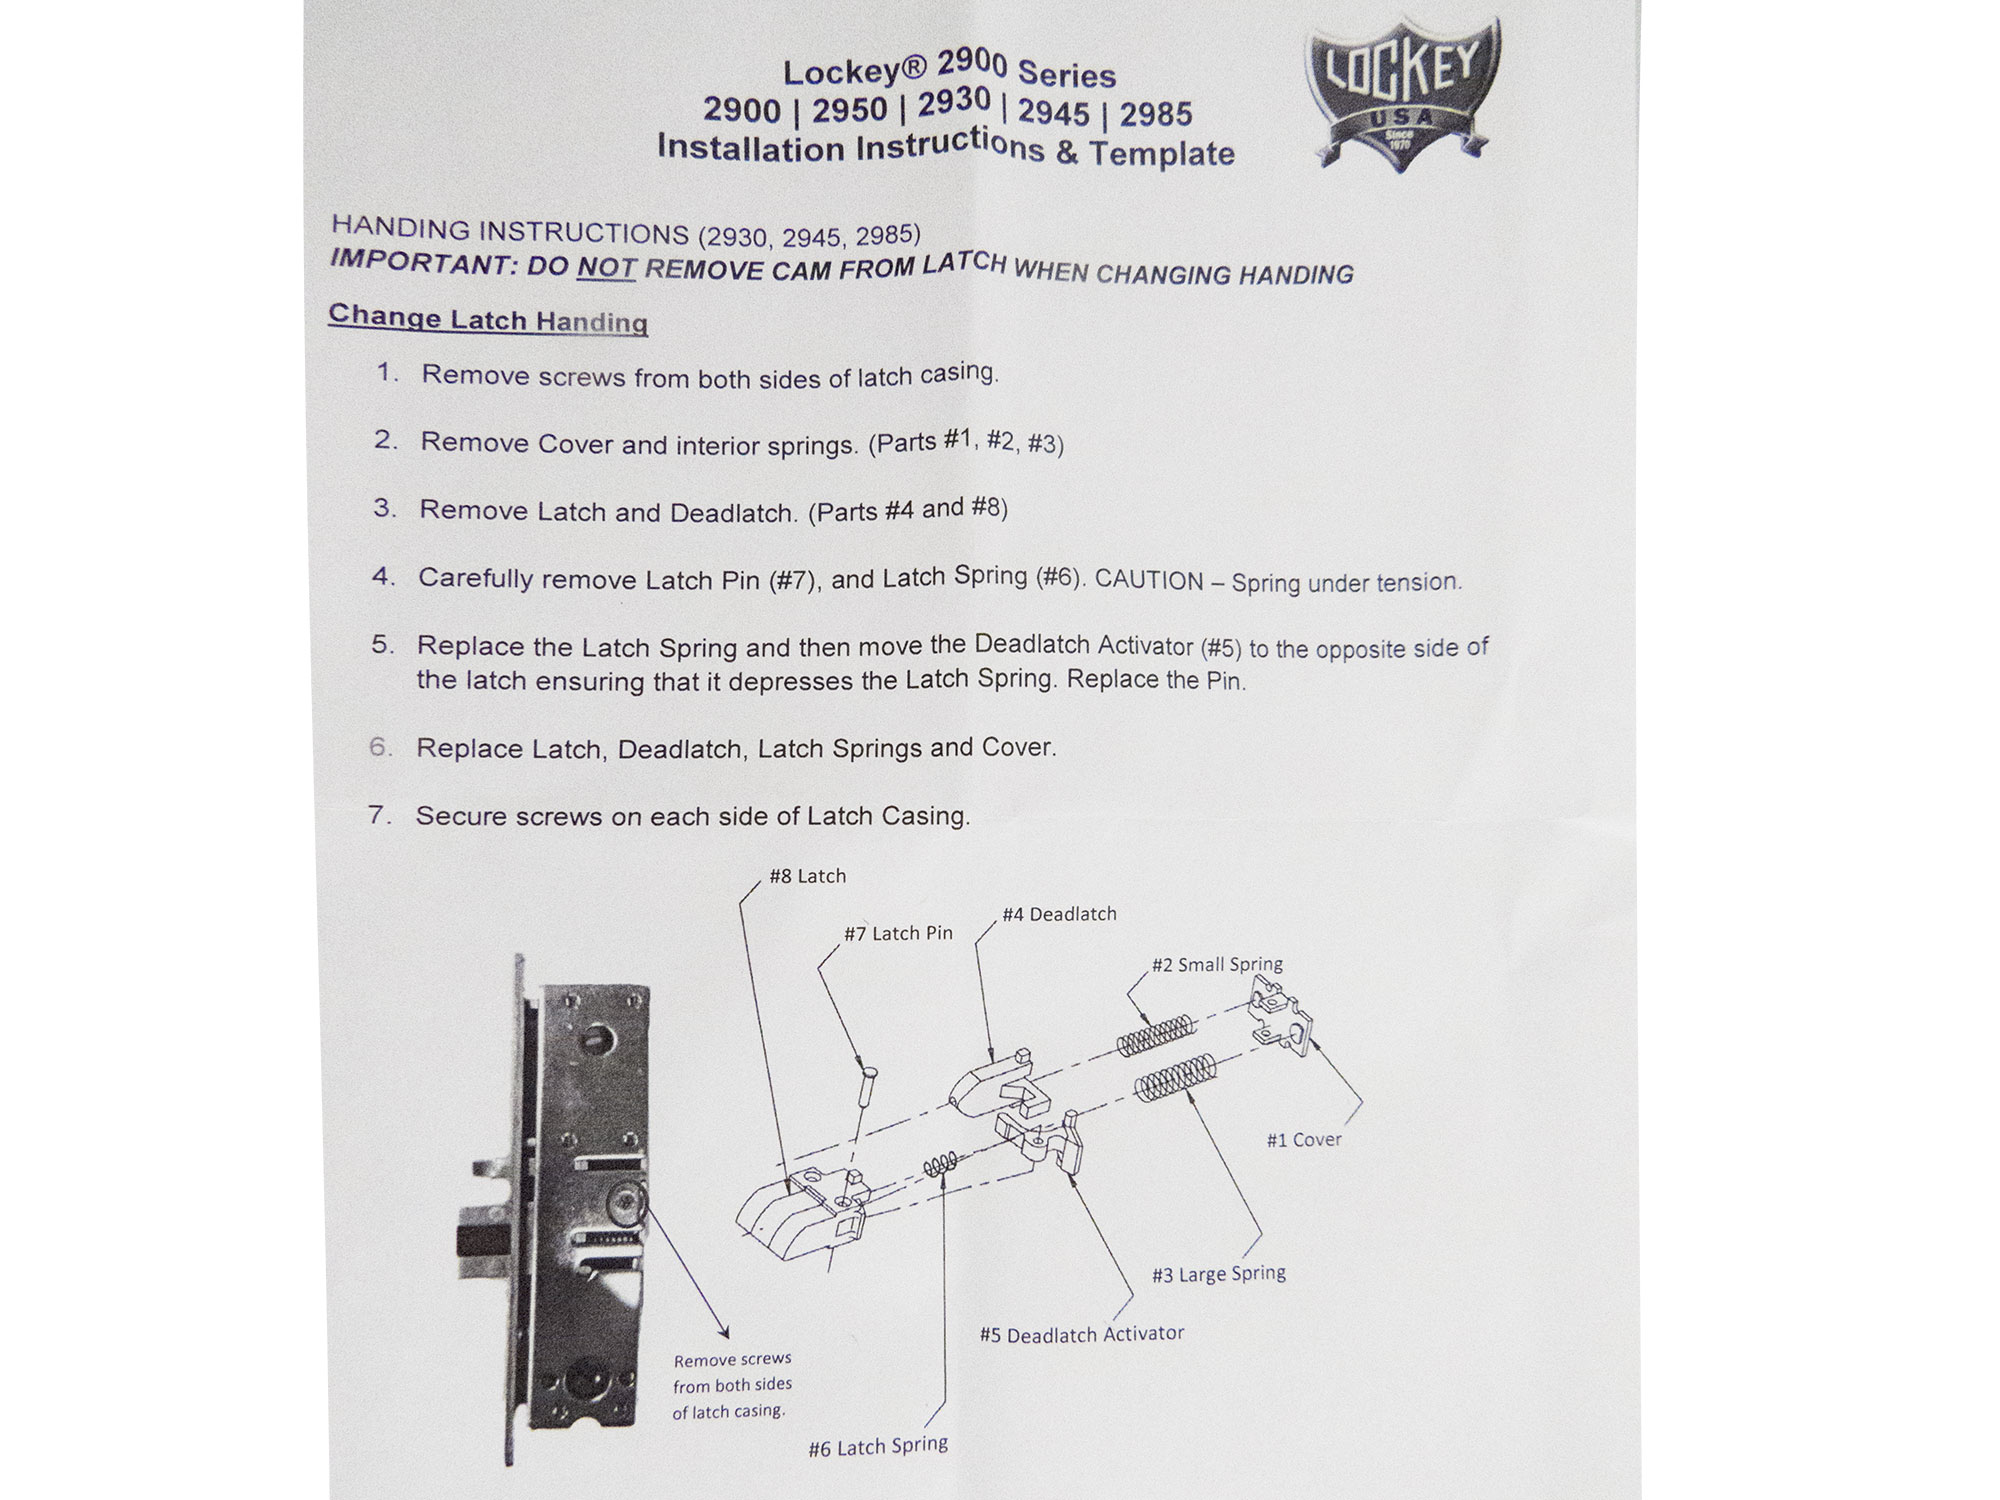 Lockey 2930 Narrow-Stile Passage Latchbolt Knob-Handle Keypad Lock